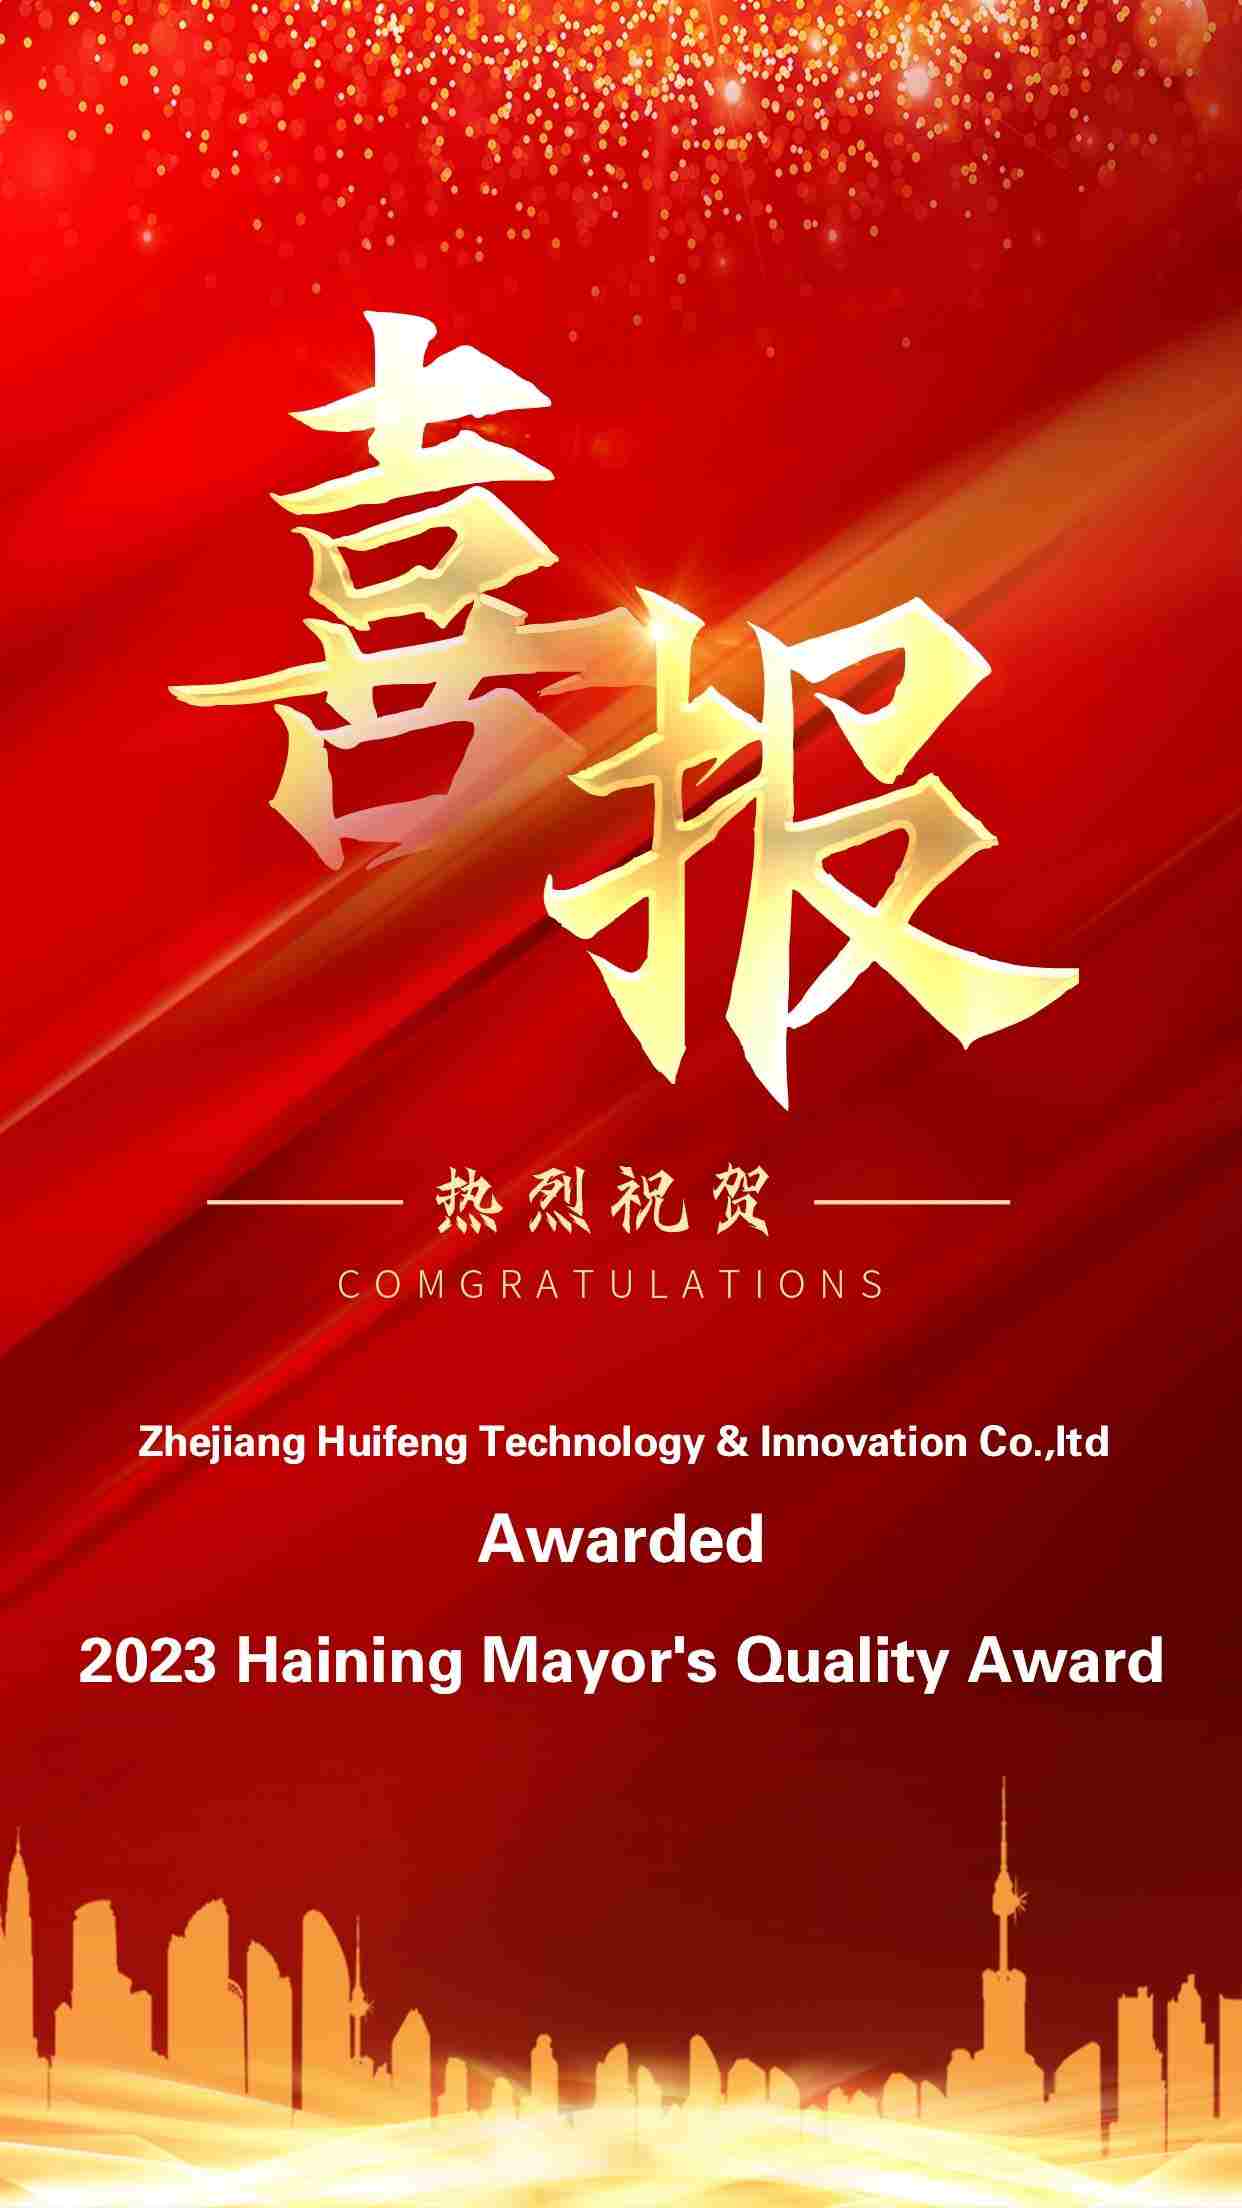 Good News! Huifeng awarded the 2023 Haining Mayor's Quality Award